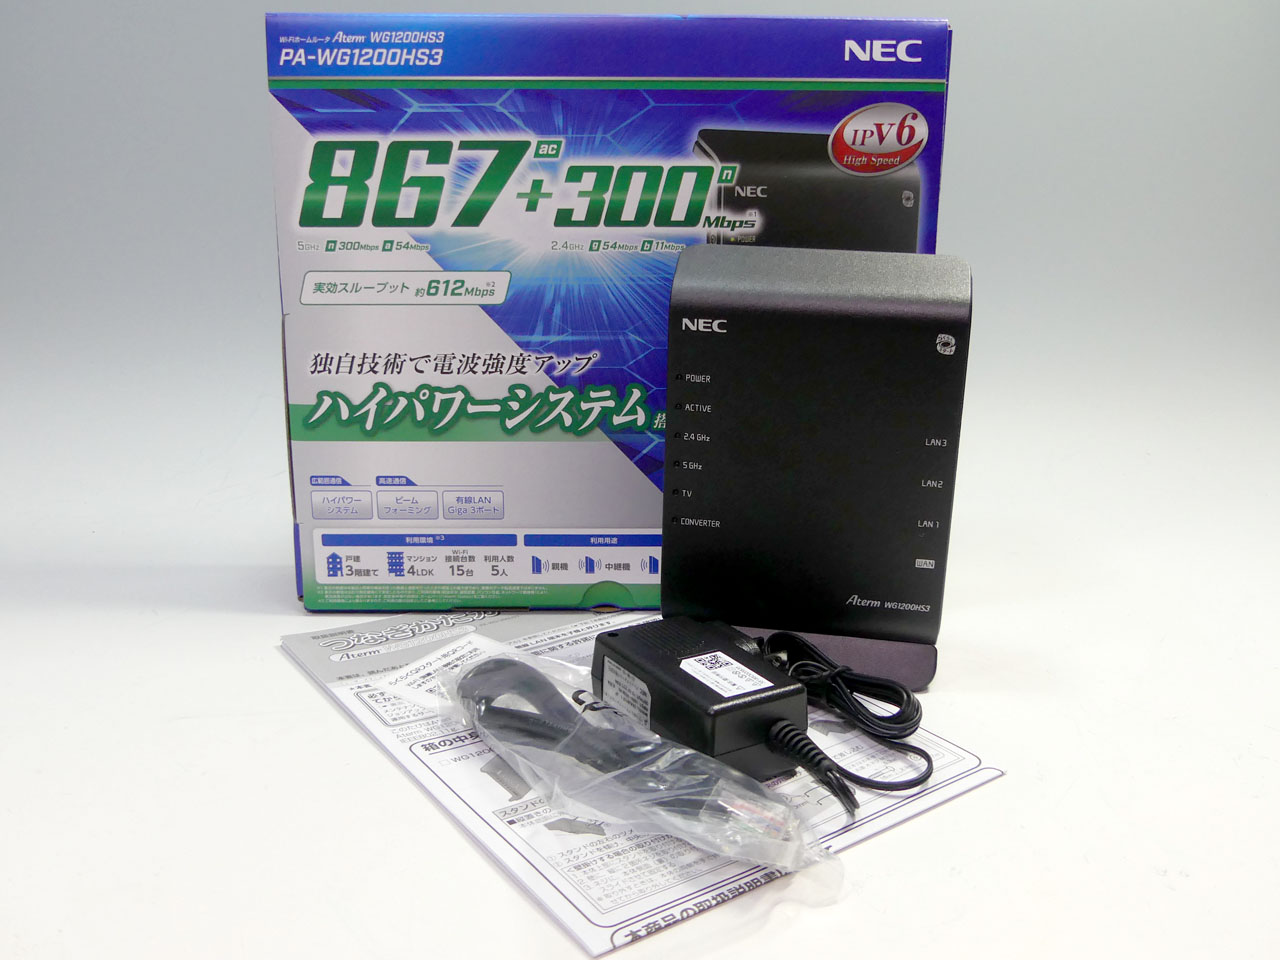 NEC WG1200HS3 PA-WG1200HS3